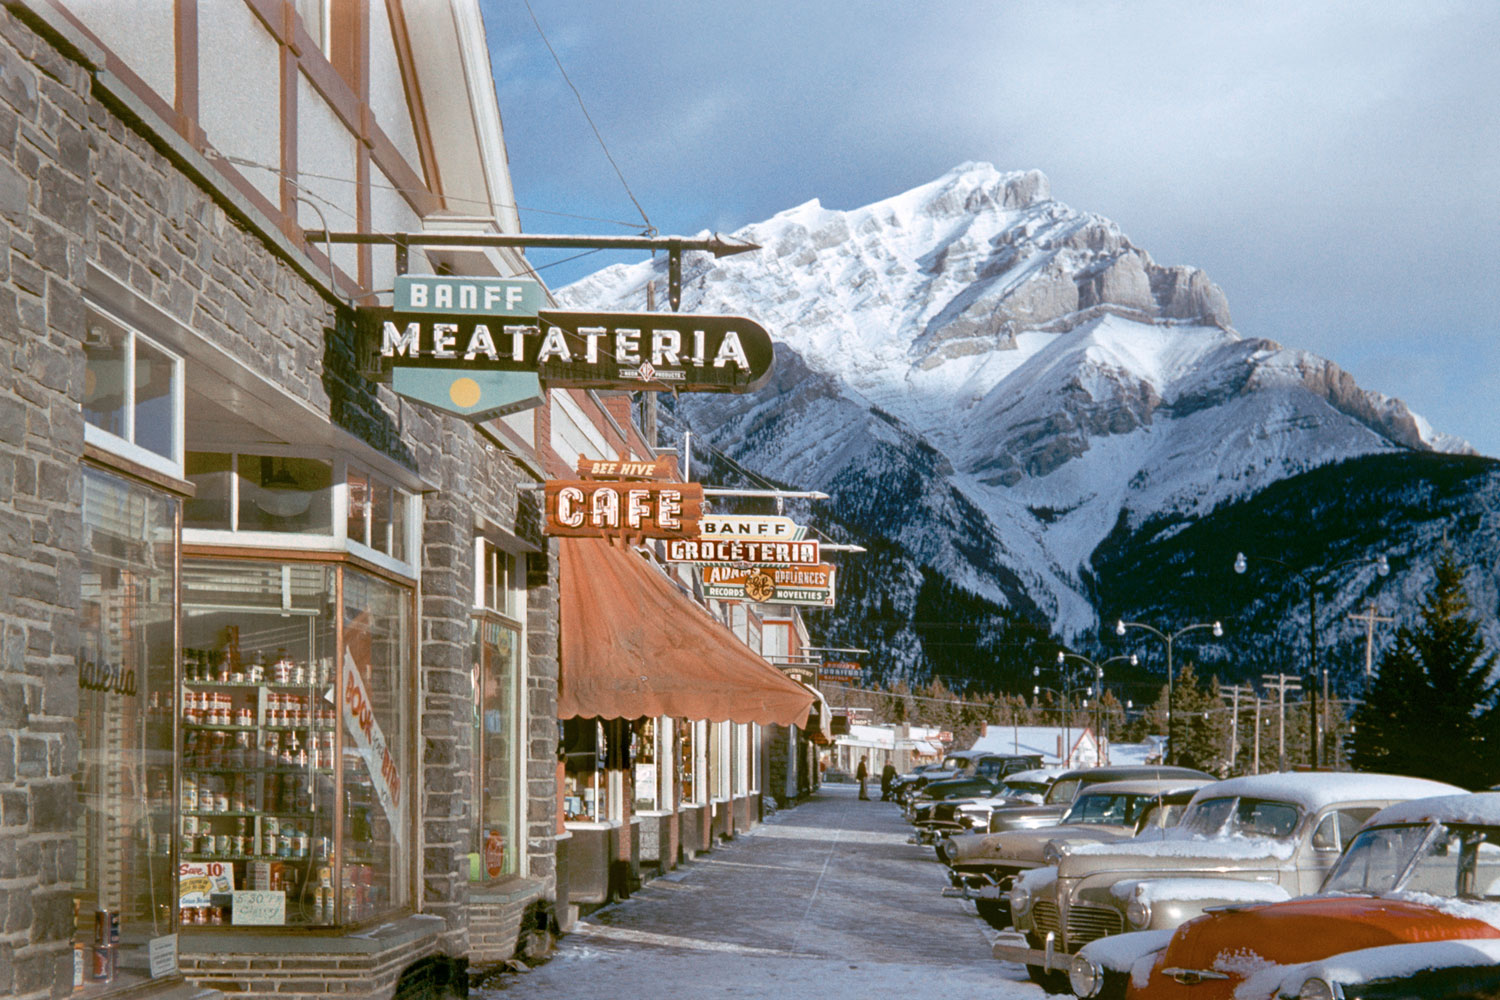 Banff Meatateria, 1955